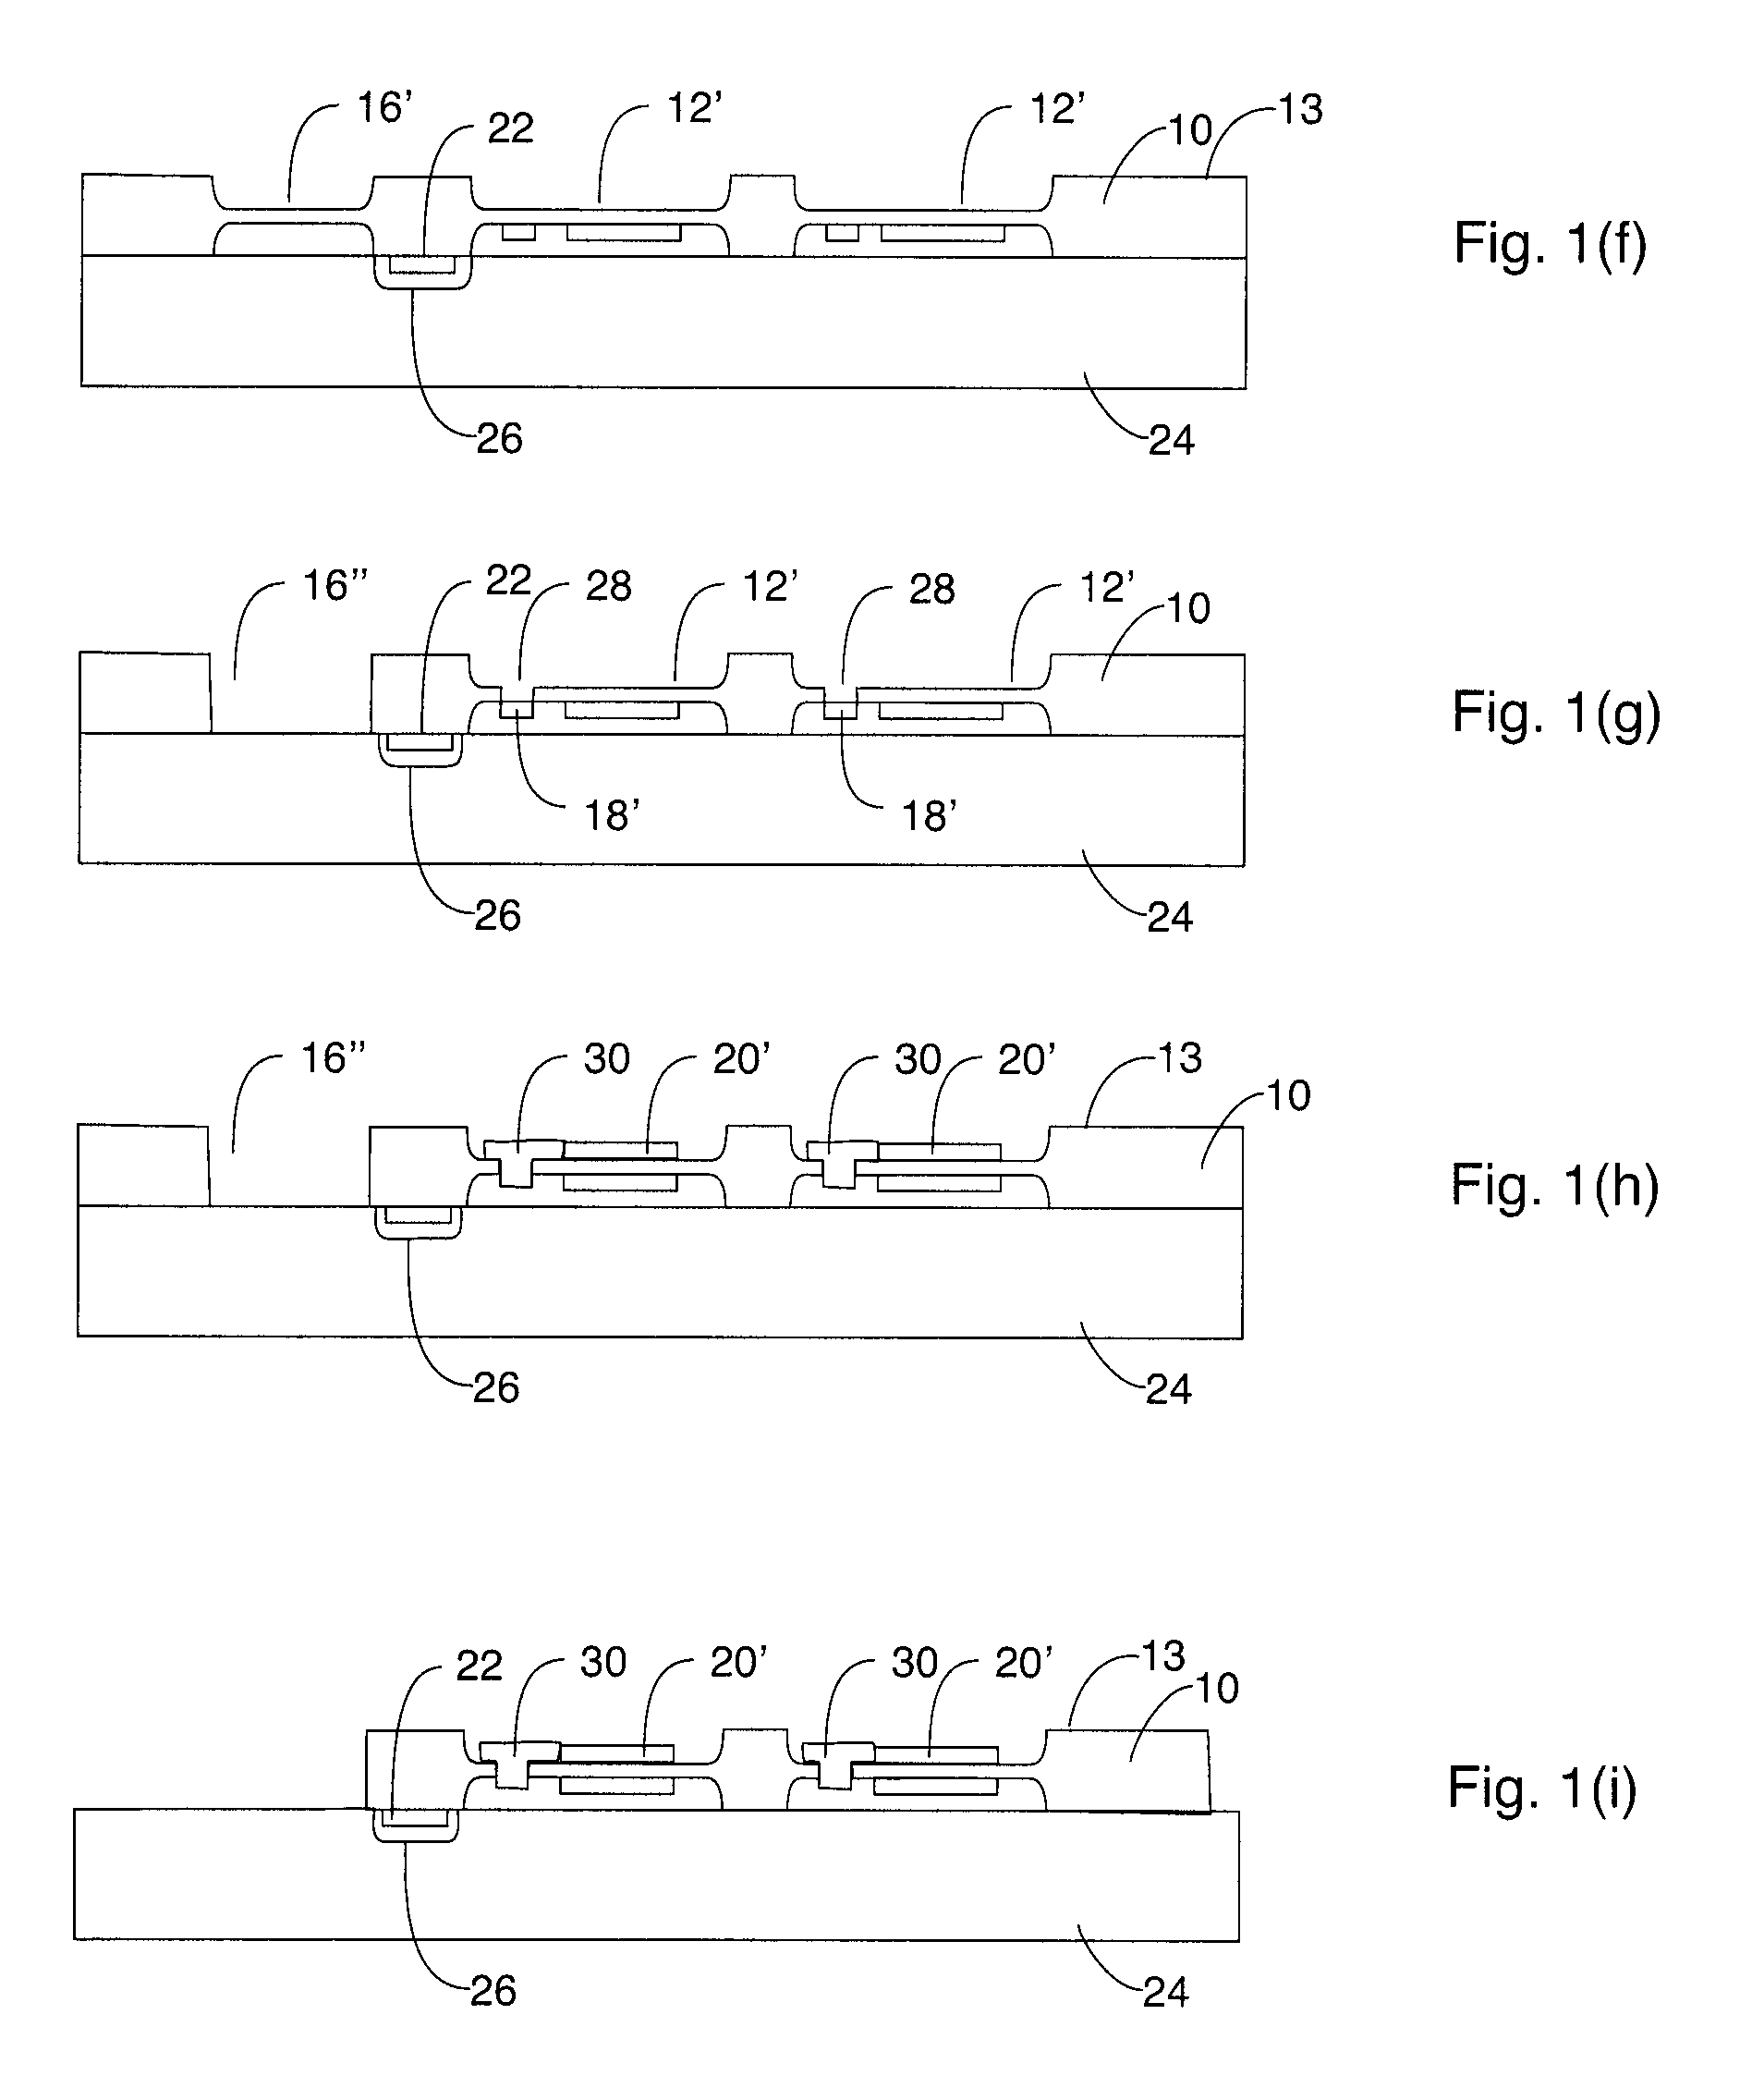 Method of fabricating quartz resonators